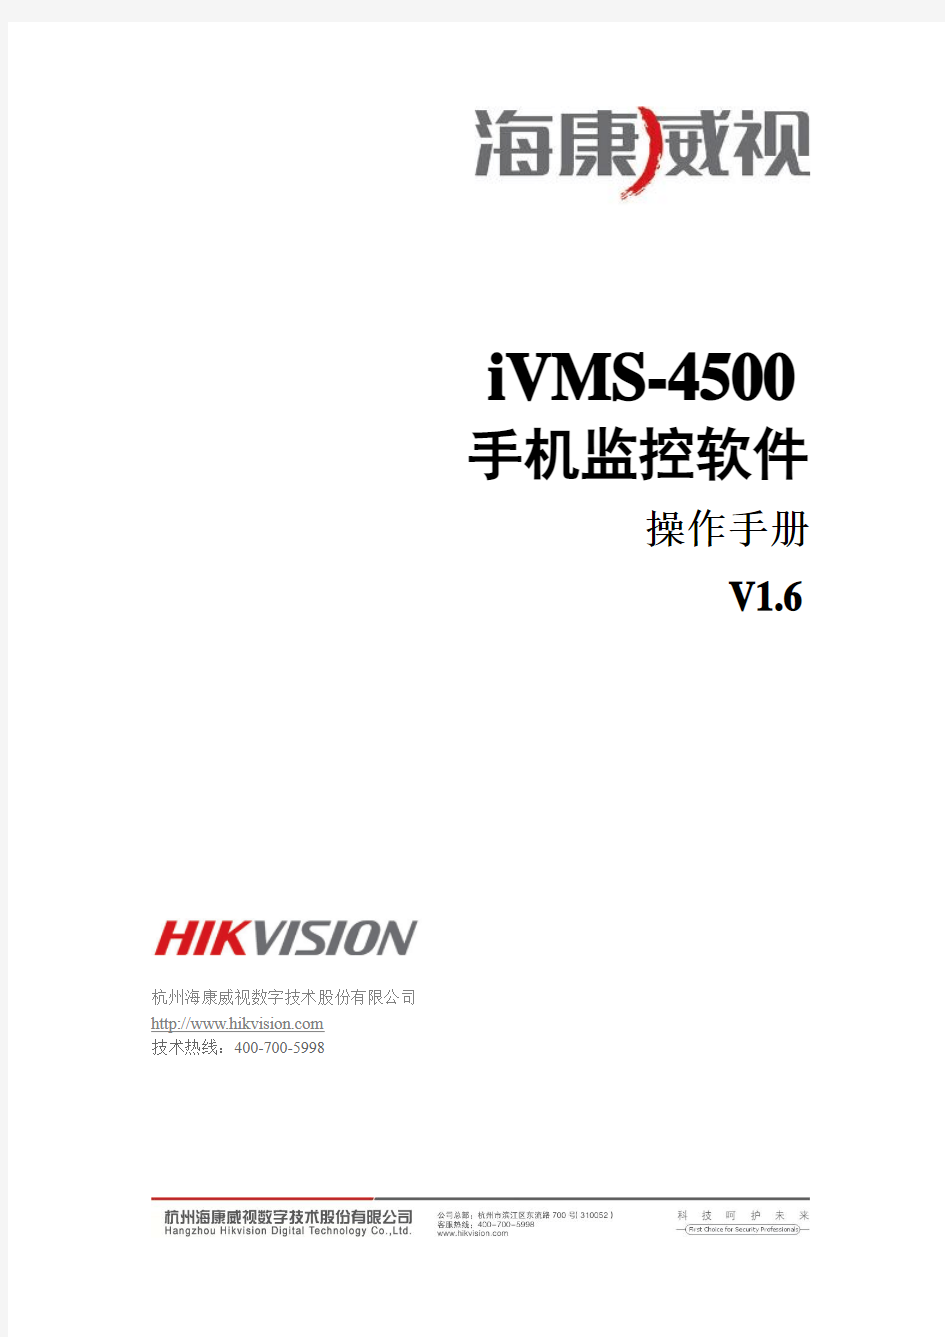 iVMS-4500(Android)手机监控软件使用手册V1.6 build20120406